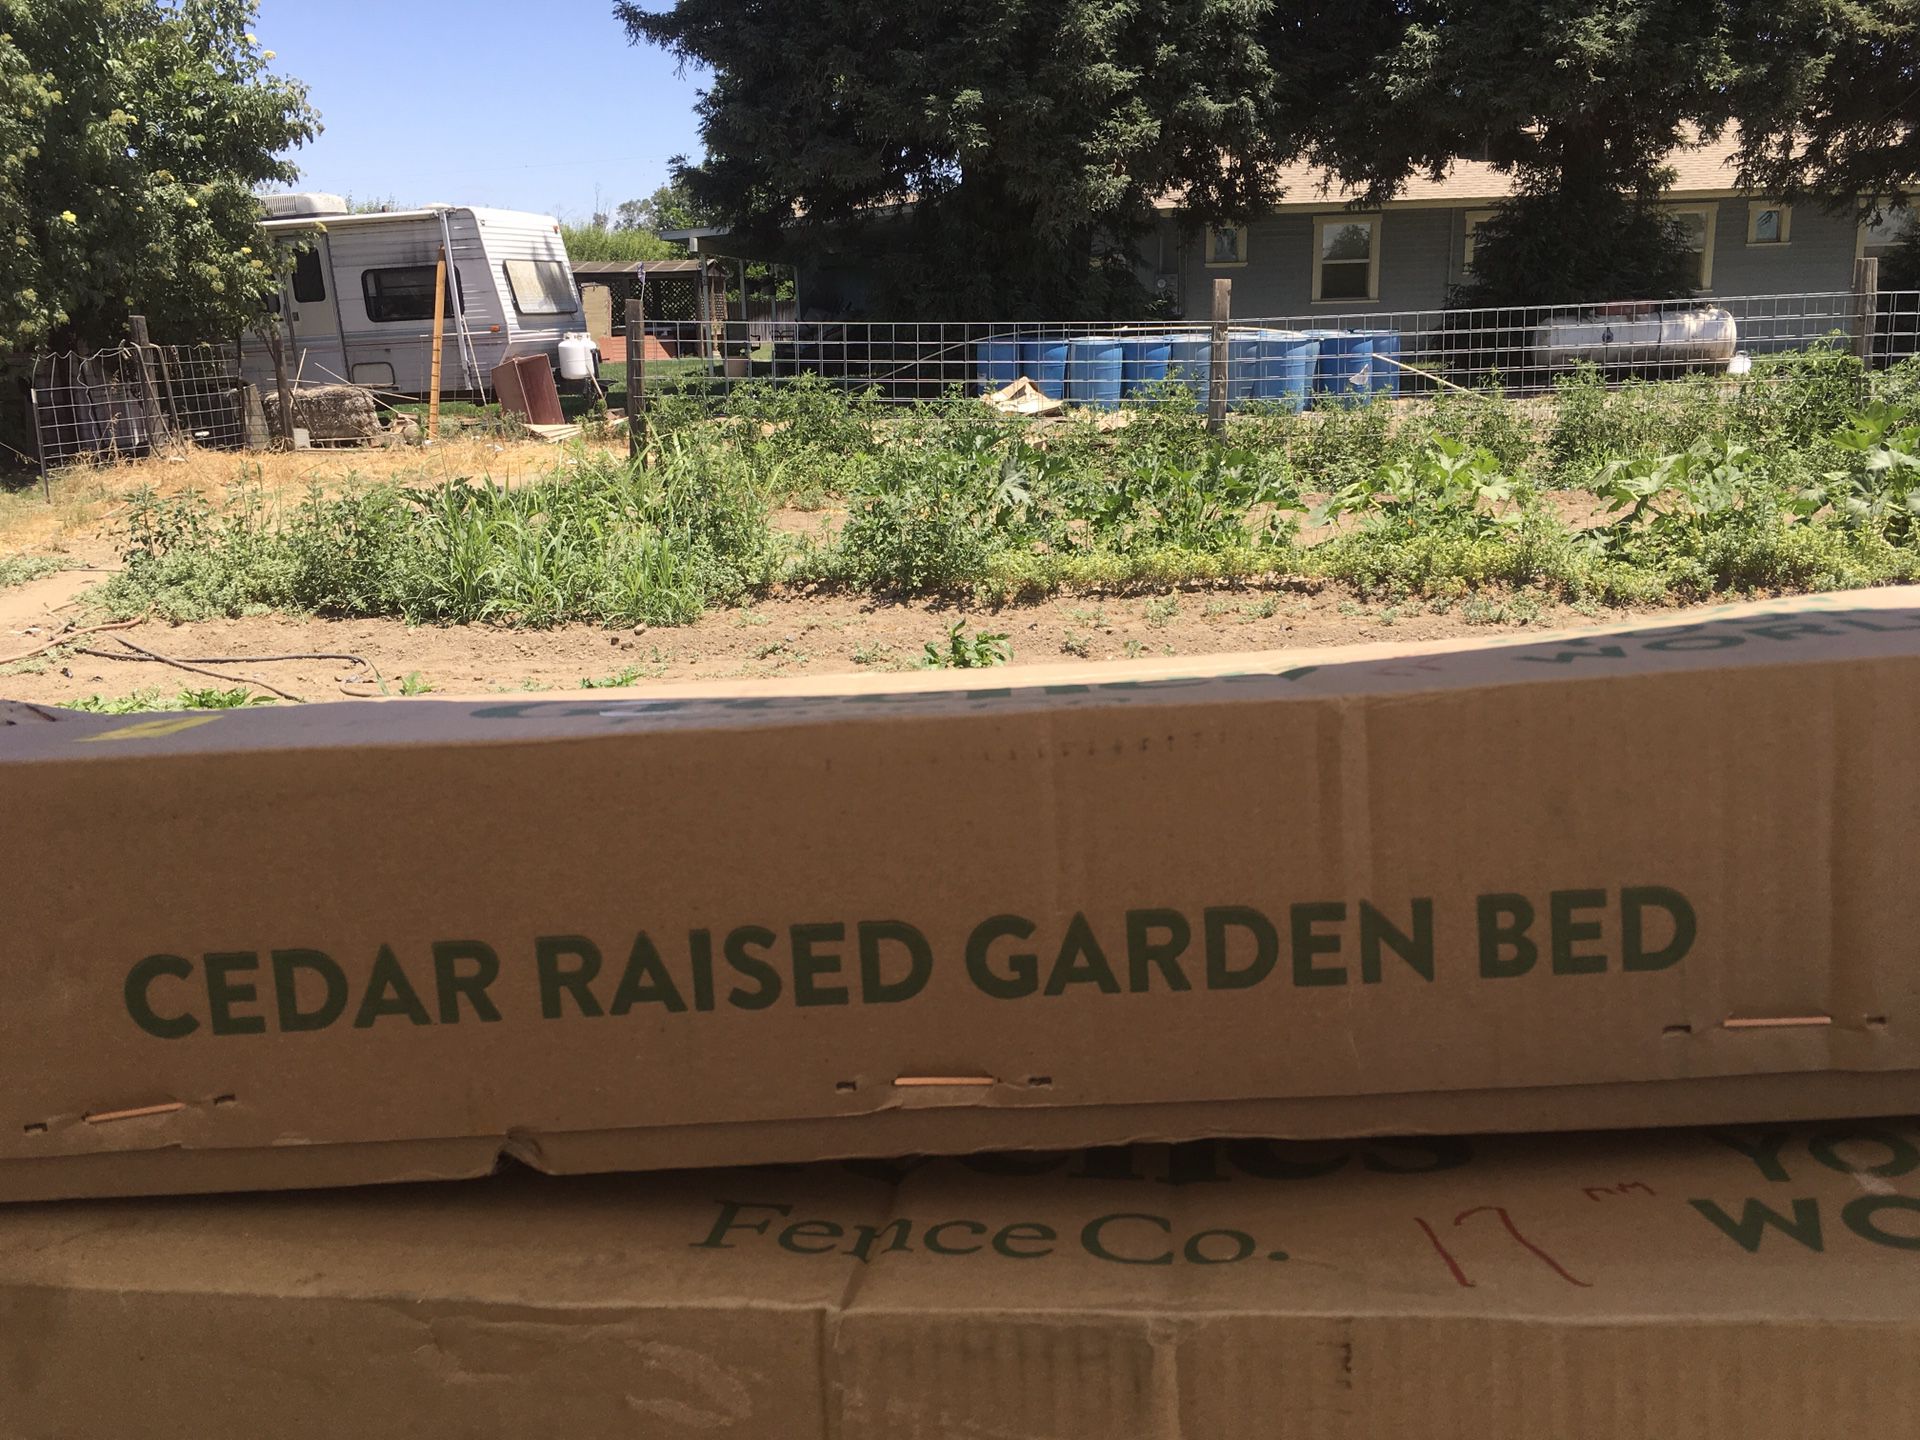 Cedar raised garden bed